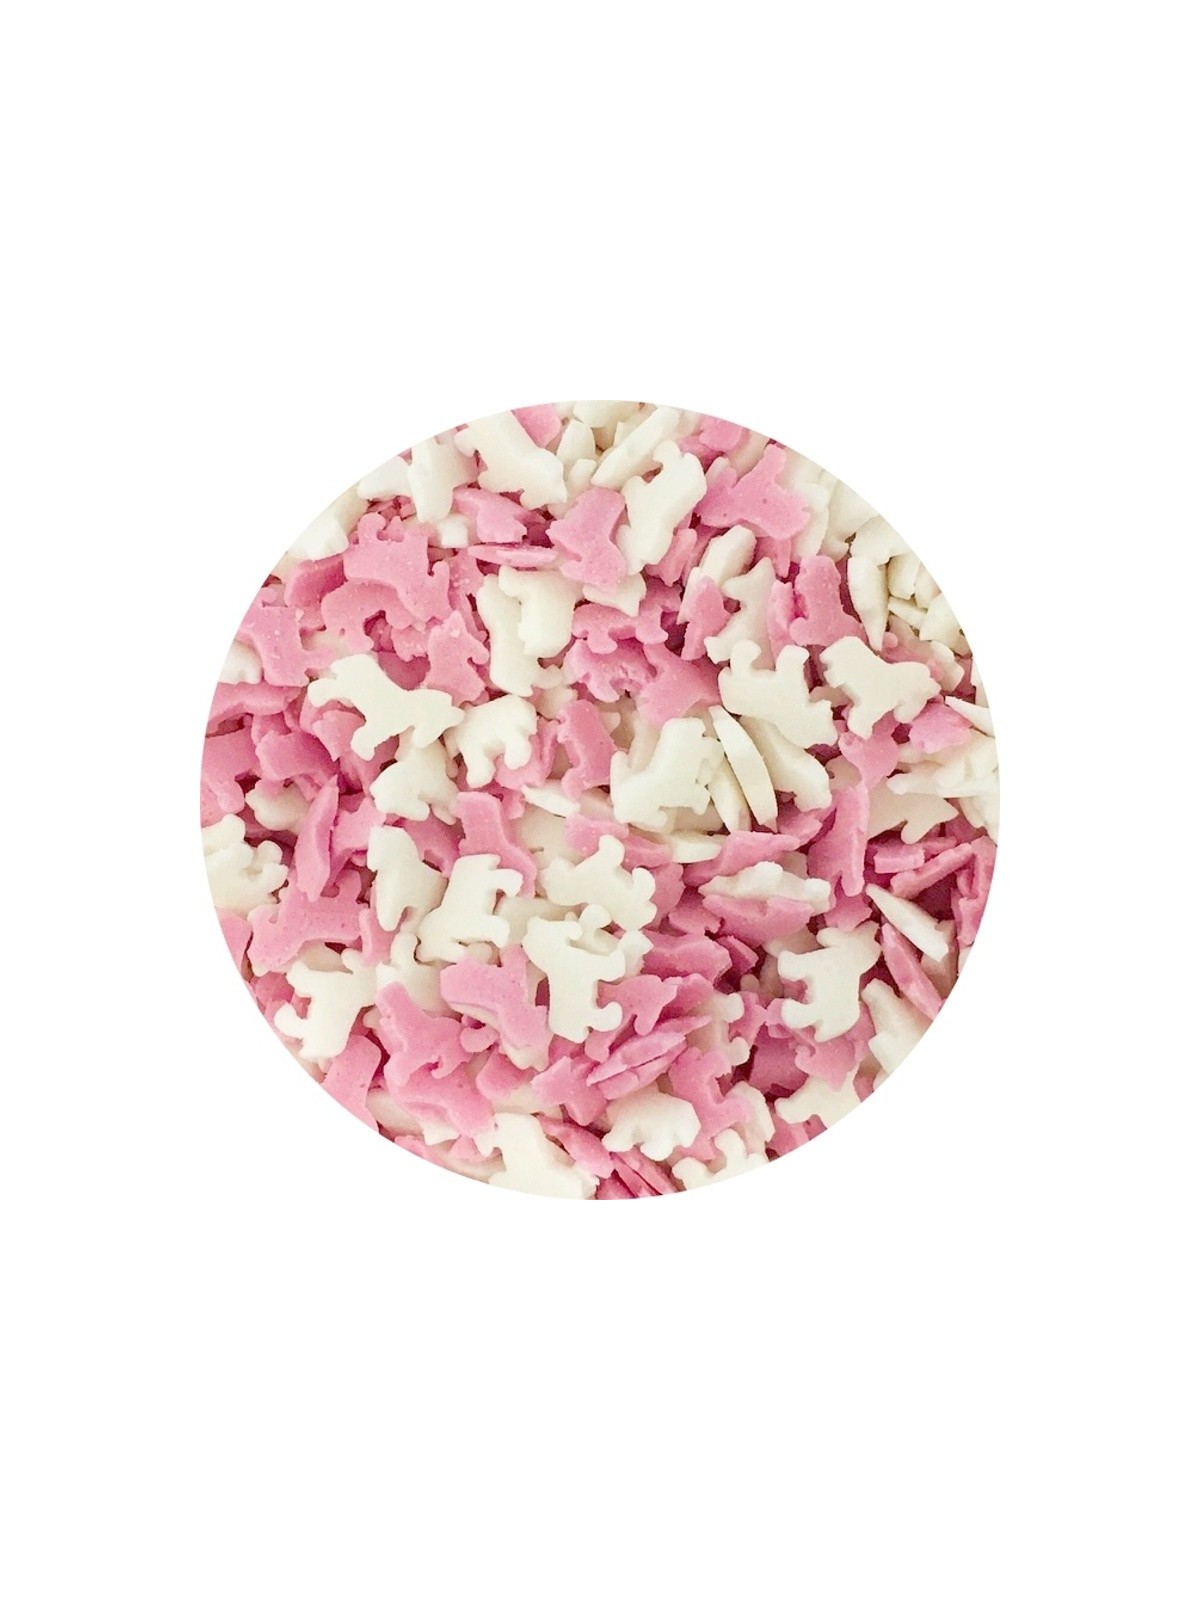 Sugar decoration - unicorns - pink / white - 100g